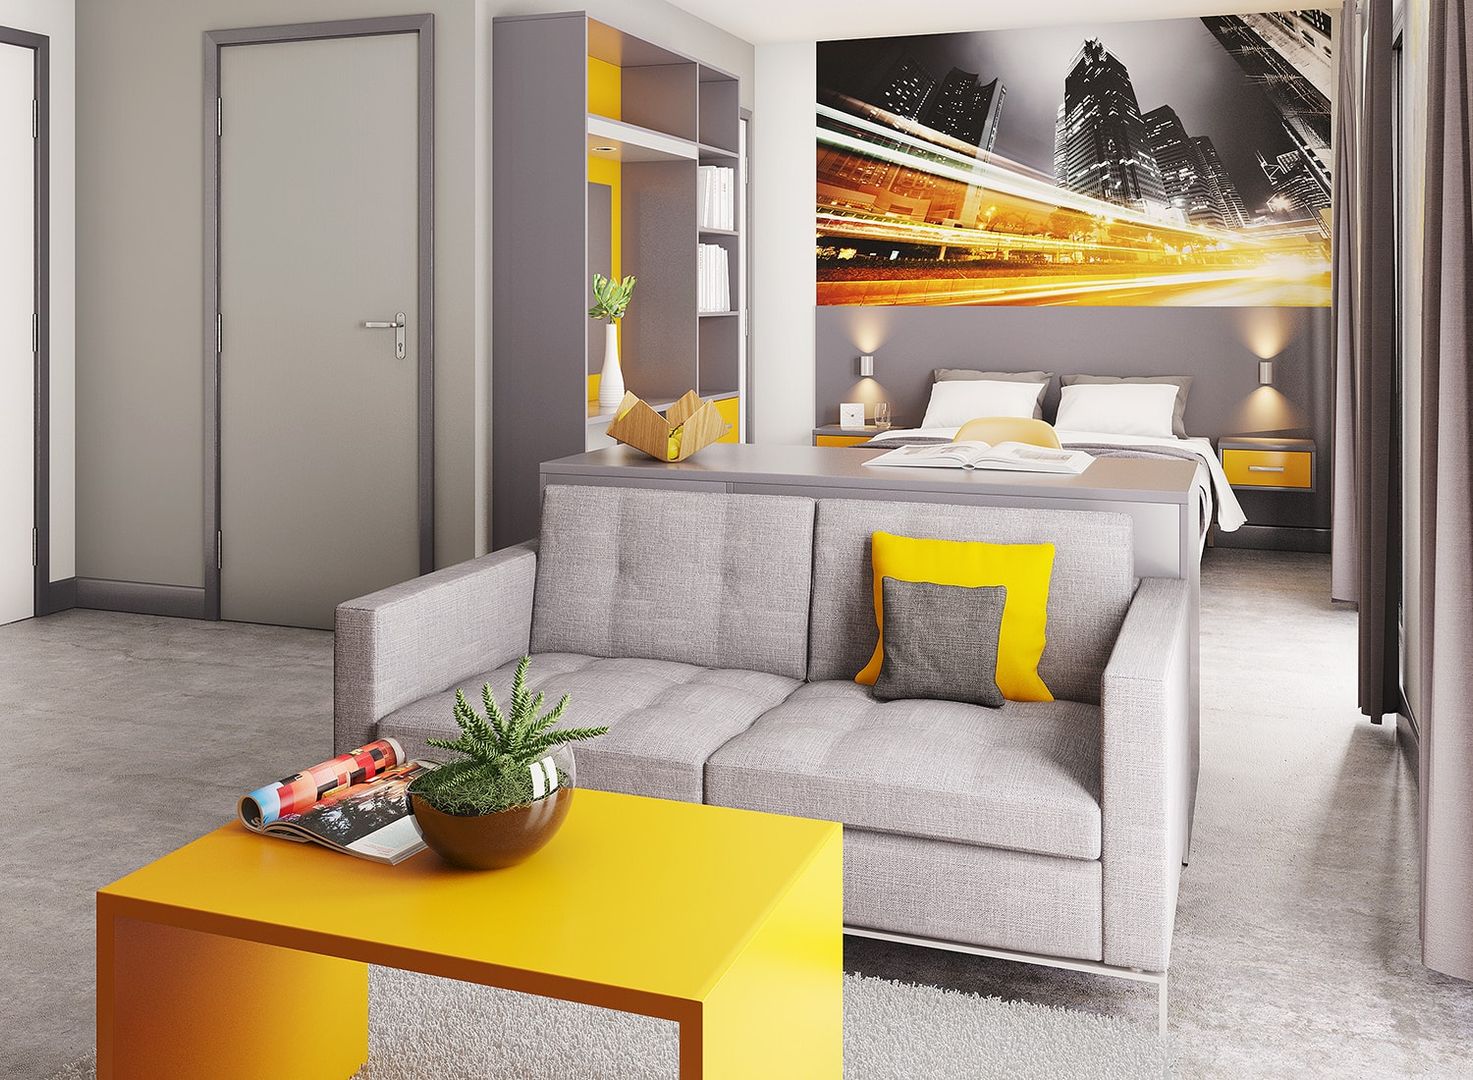 View 3 of Studio Apartment CRISP3D Modern Bedroom Bricks 3dvisualisation,CGI,3dimages,visualisation